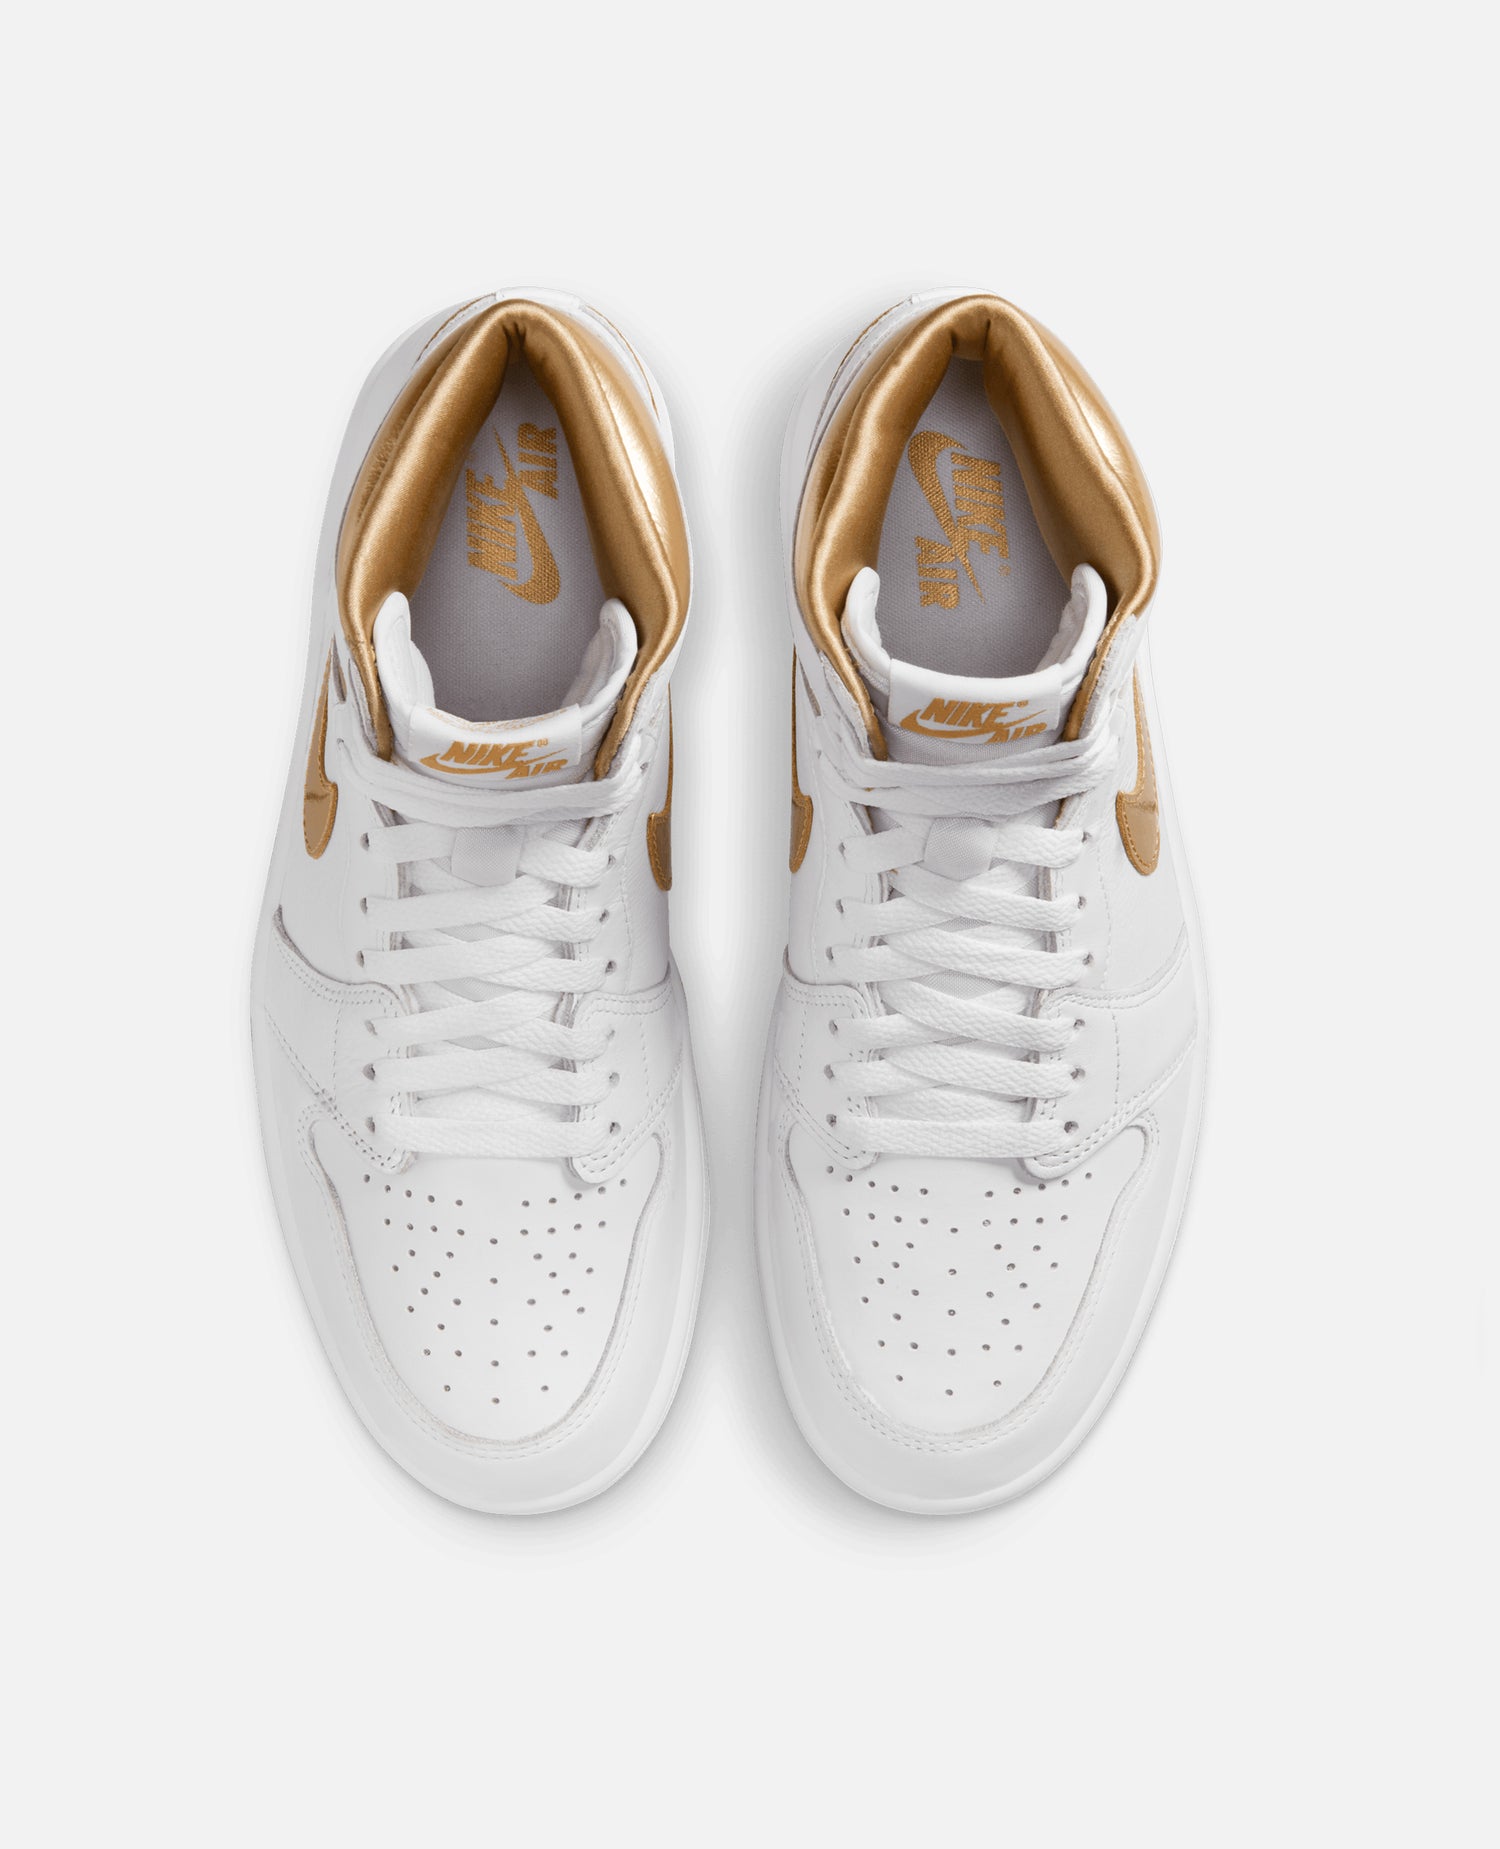 Nike WMNS Air Jordan 1 Retro Hi OG (White/Metallic Gold-Gum Light Brown)